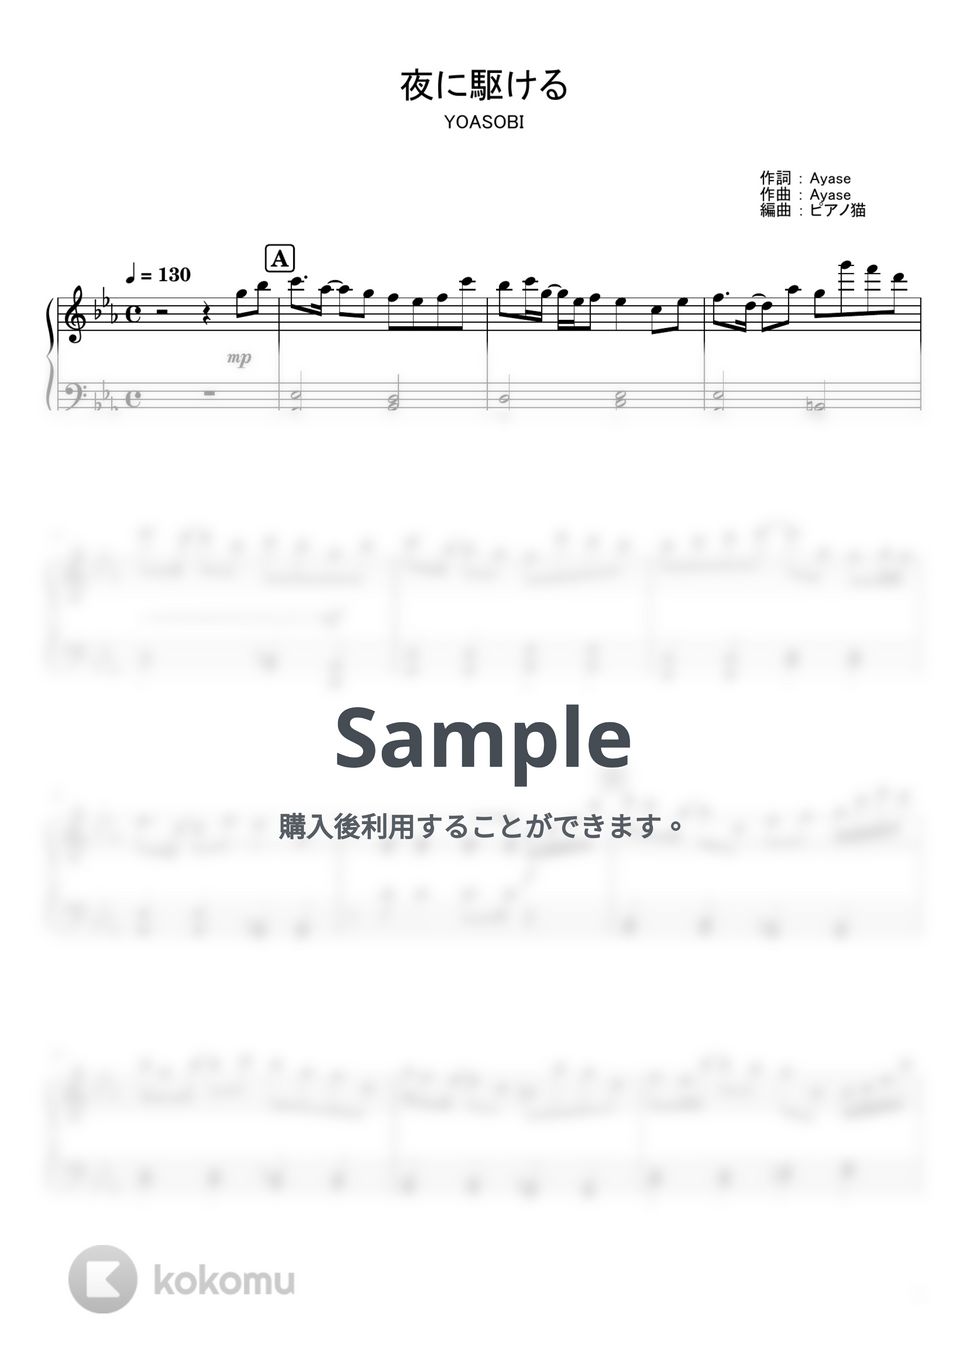 YOASOBI - 夜に駆ける (ピアノ,楽譜,弾き語り,ピアノソロ) by ピアノ猫